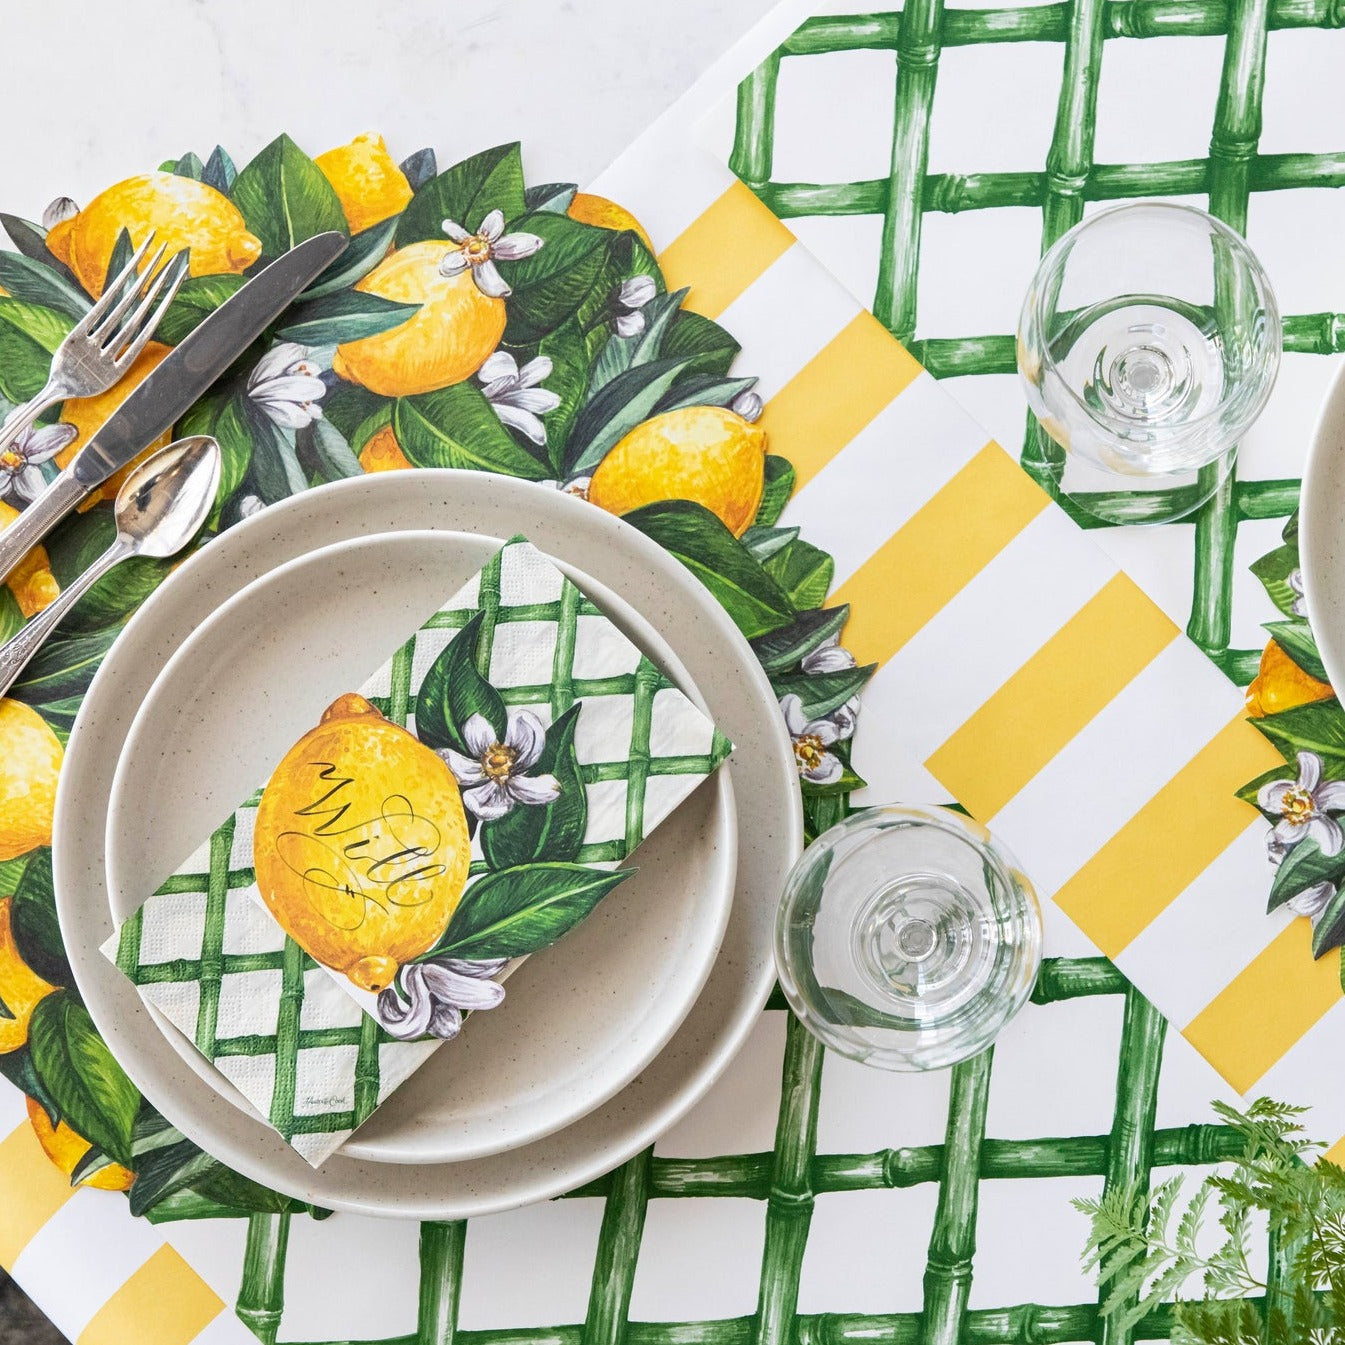 The Die-cut Lemon Wreath under an elegant table setting, at an angle.